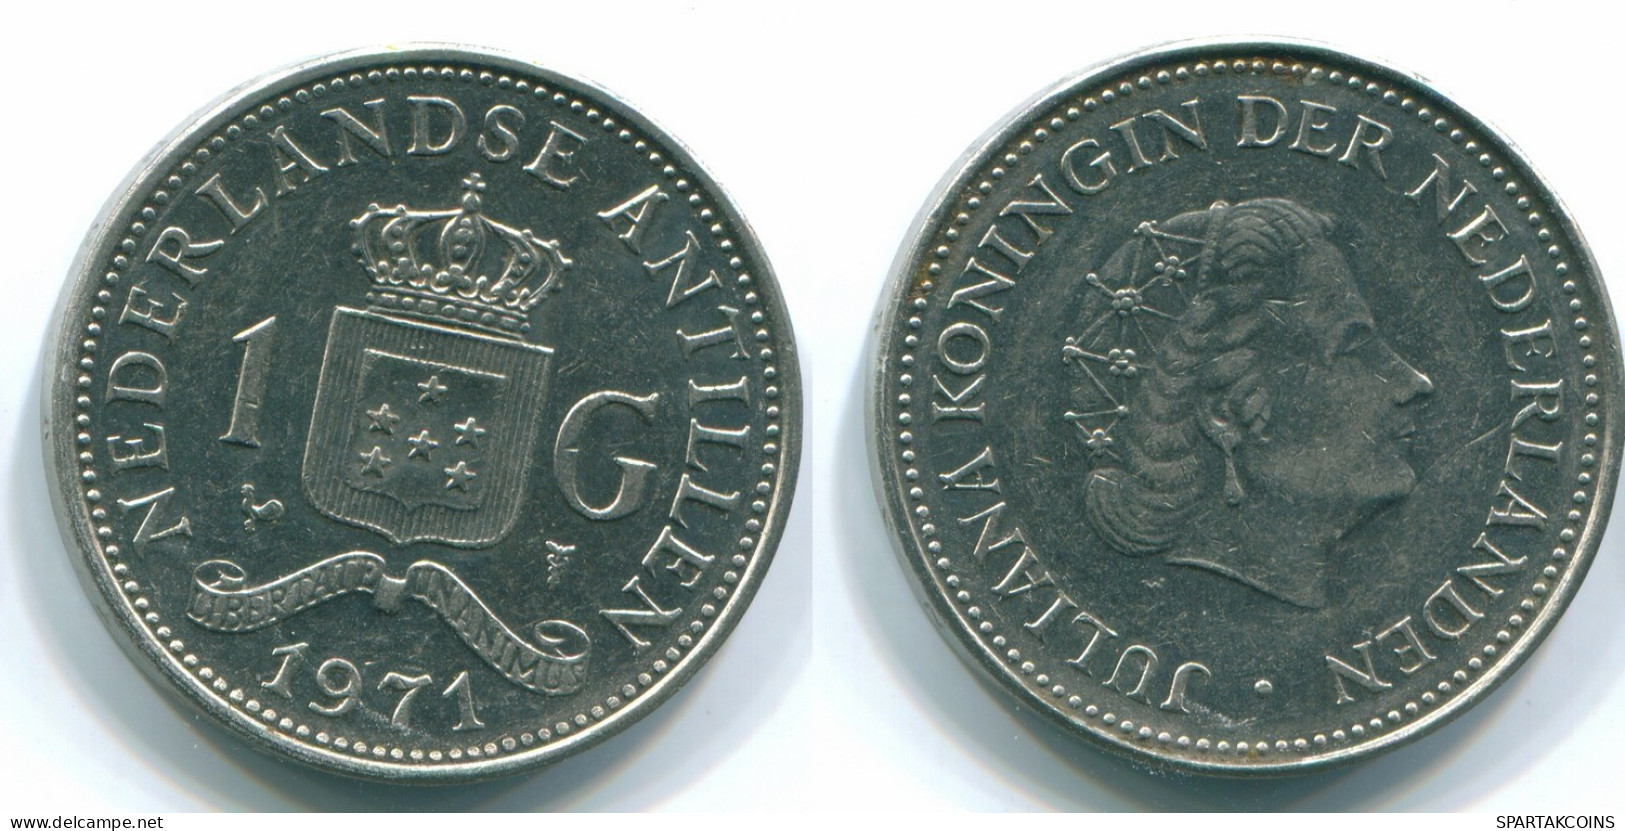 1 GULDEN 1971 NETHERLANDS ANTILLES Nickel Colonial Coin #S12008.U.A - Antille Olandesi